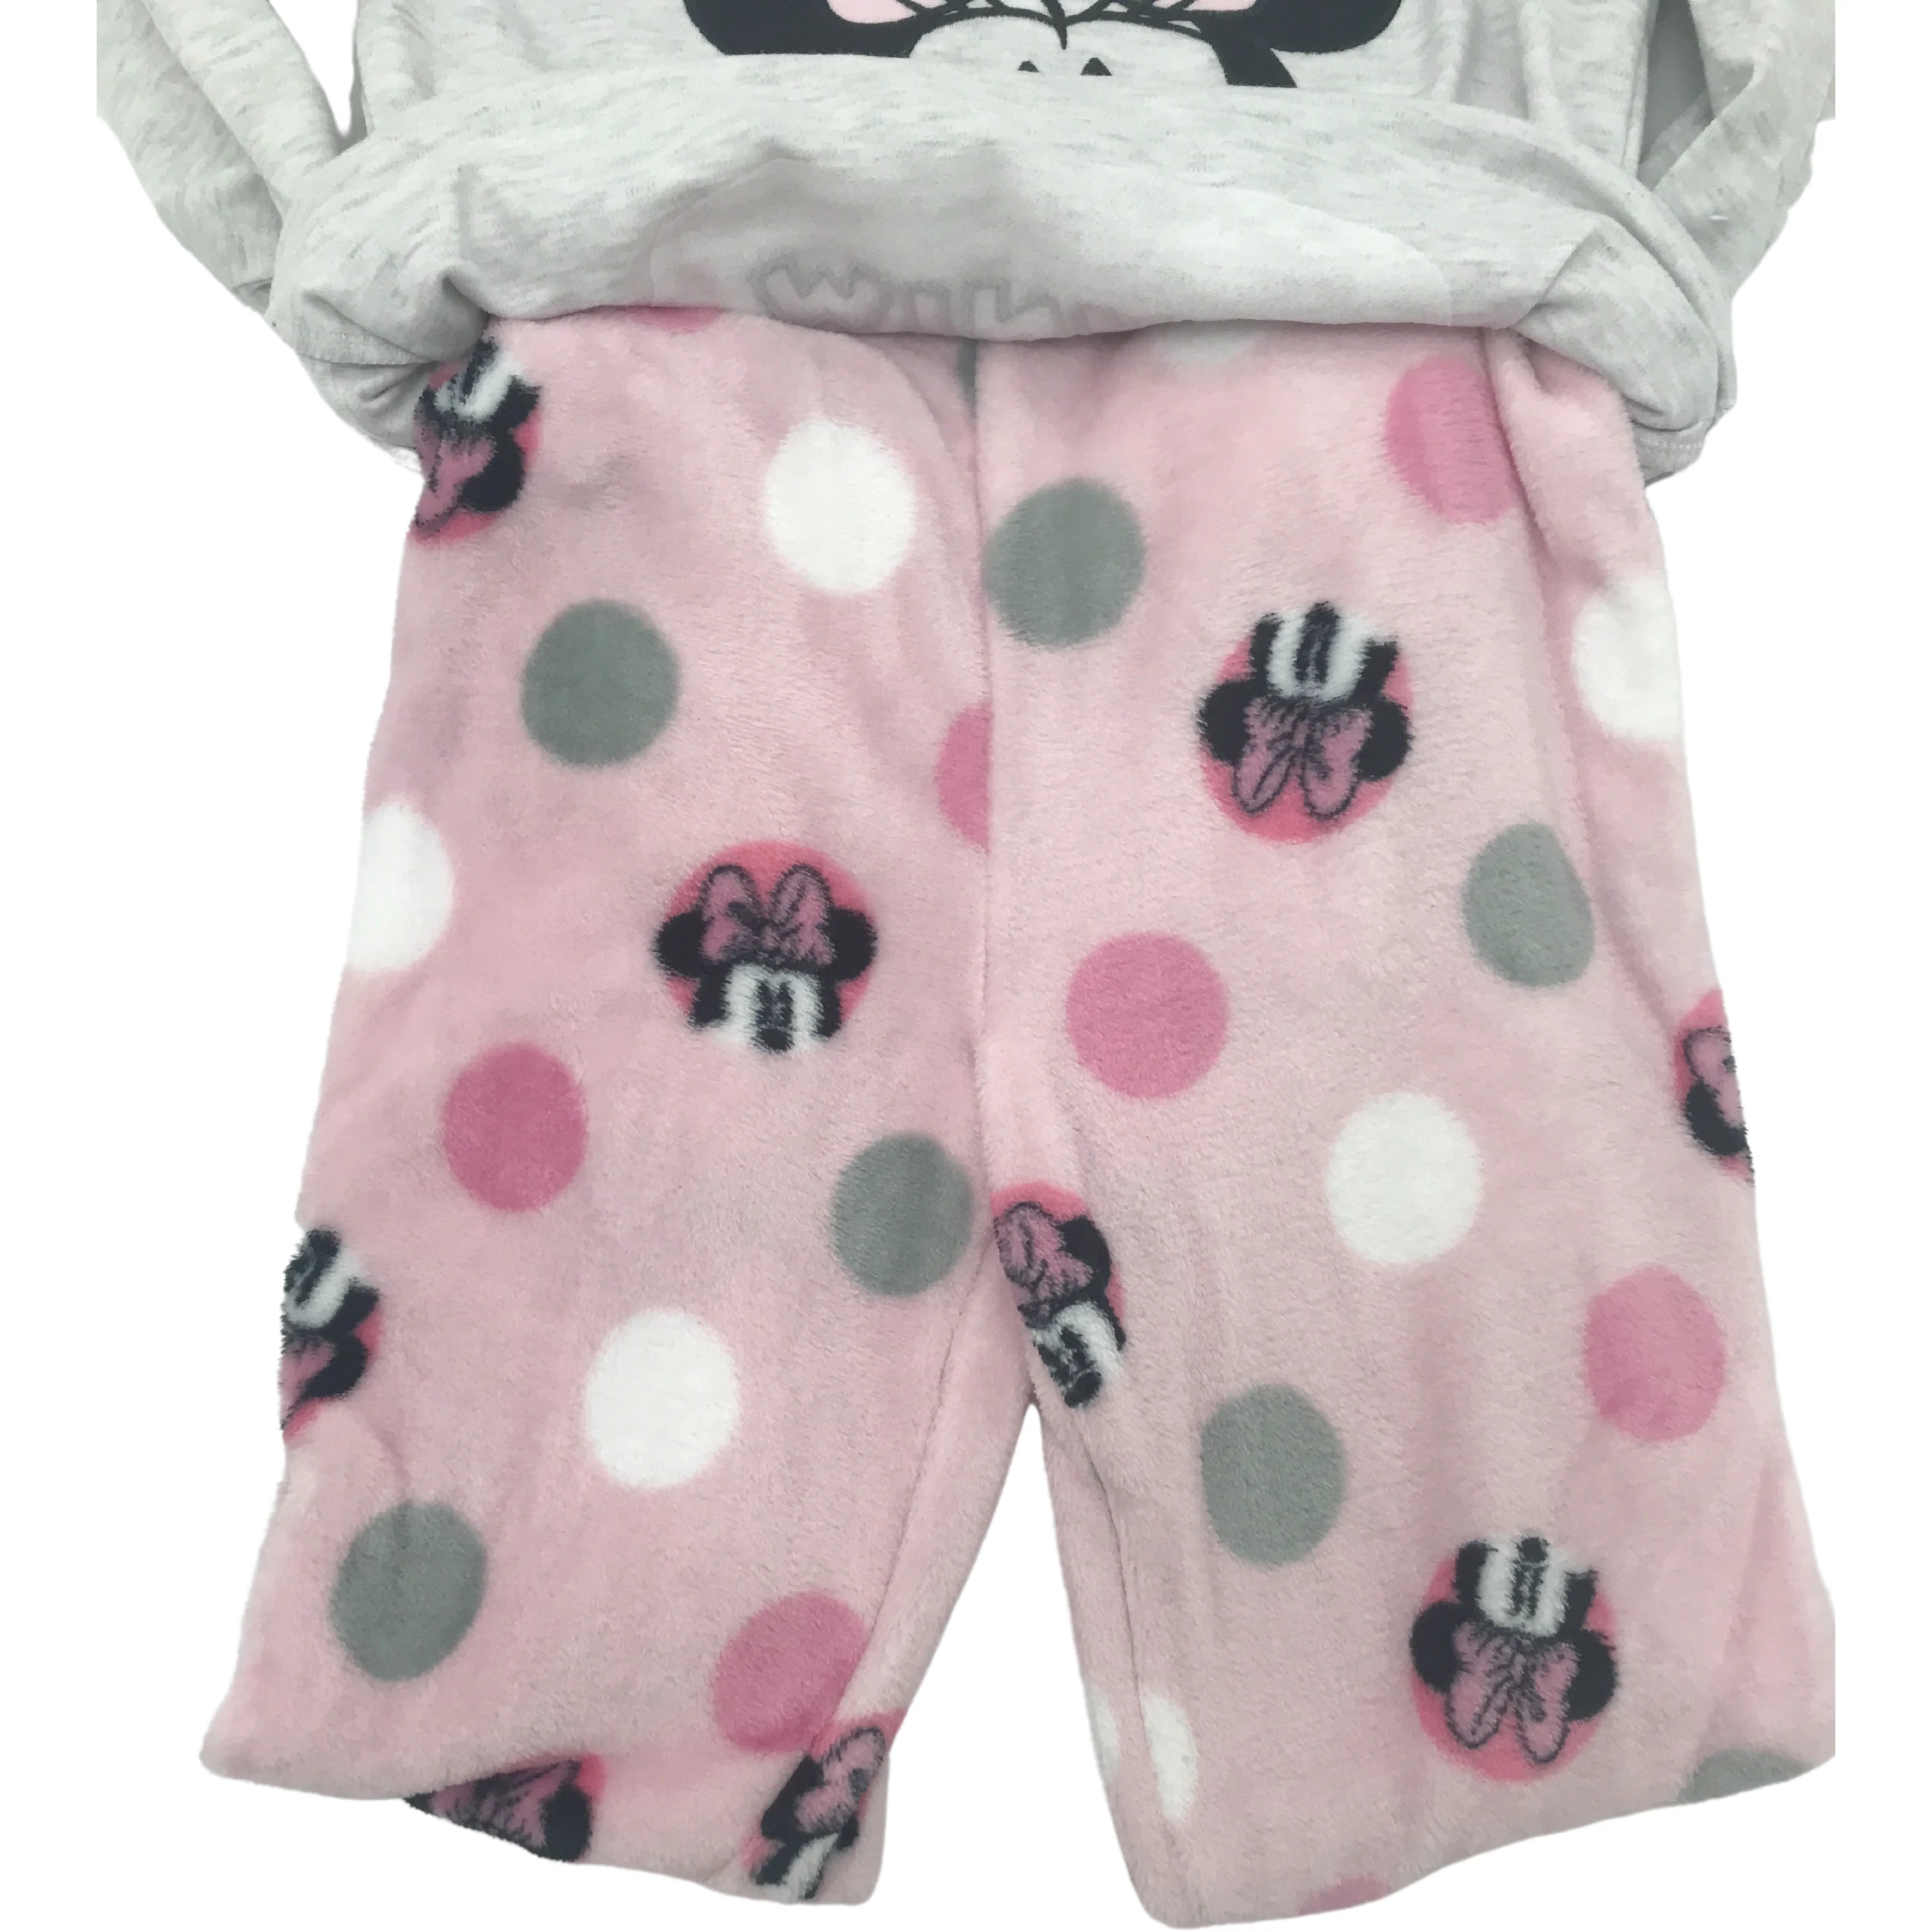 Disney Girl's Pajamas Set: Minnie Mouse / Grey & Pink / Medium (7/8)